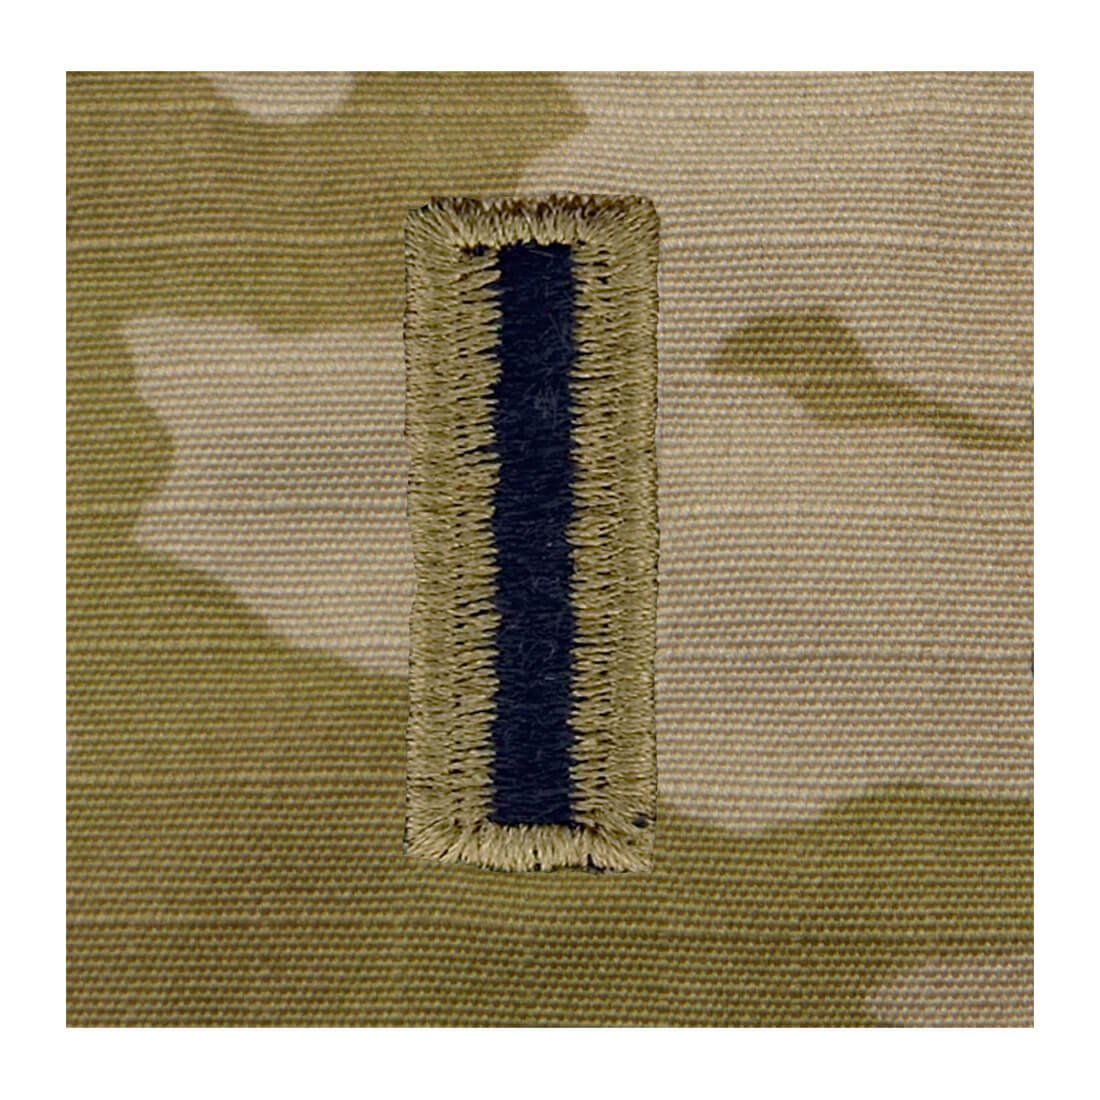 CW5 Chief Warrant Officer 5 Army Rank Sew On OCP Patch - 2x2